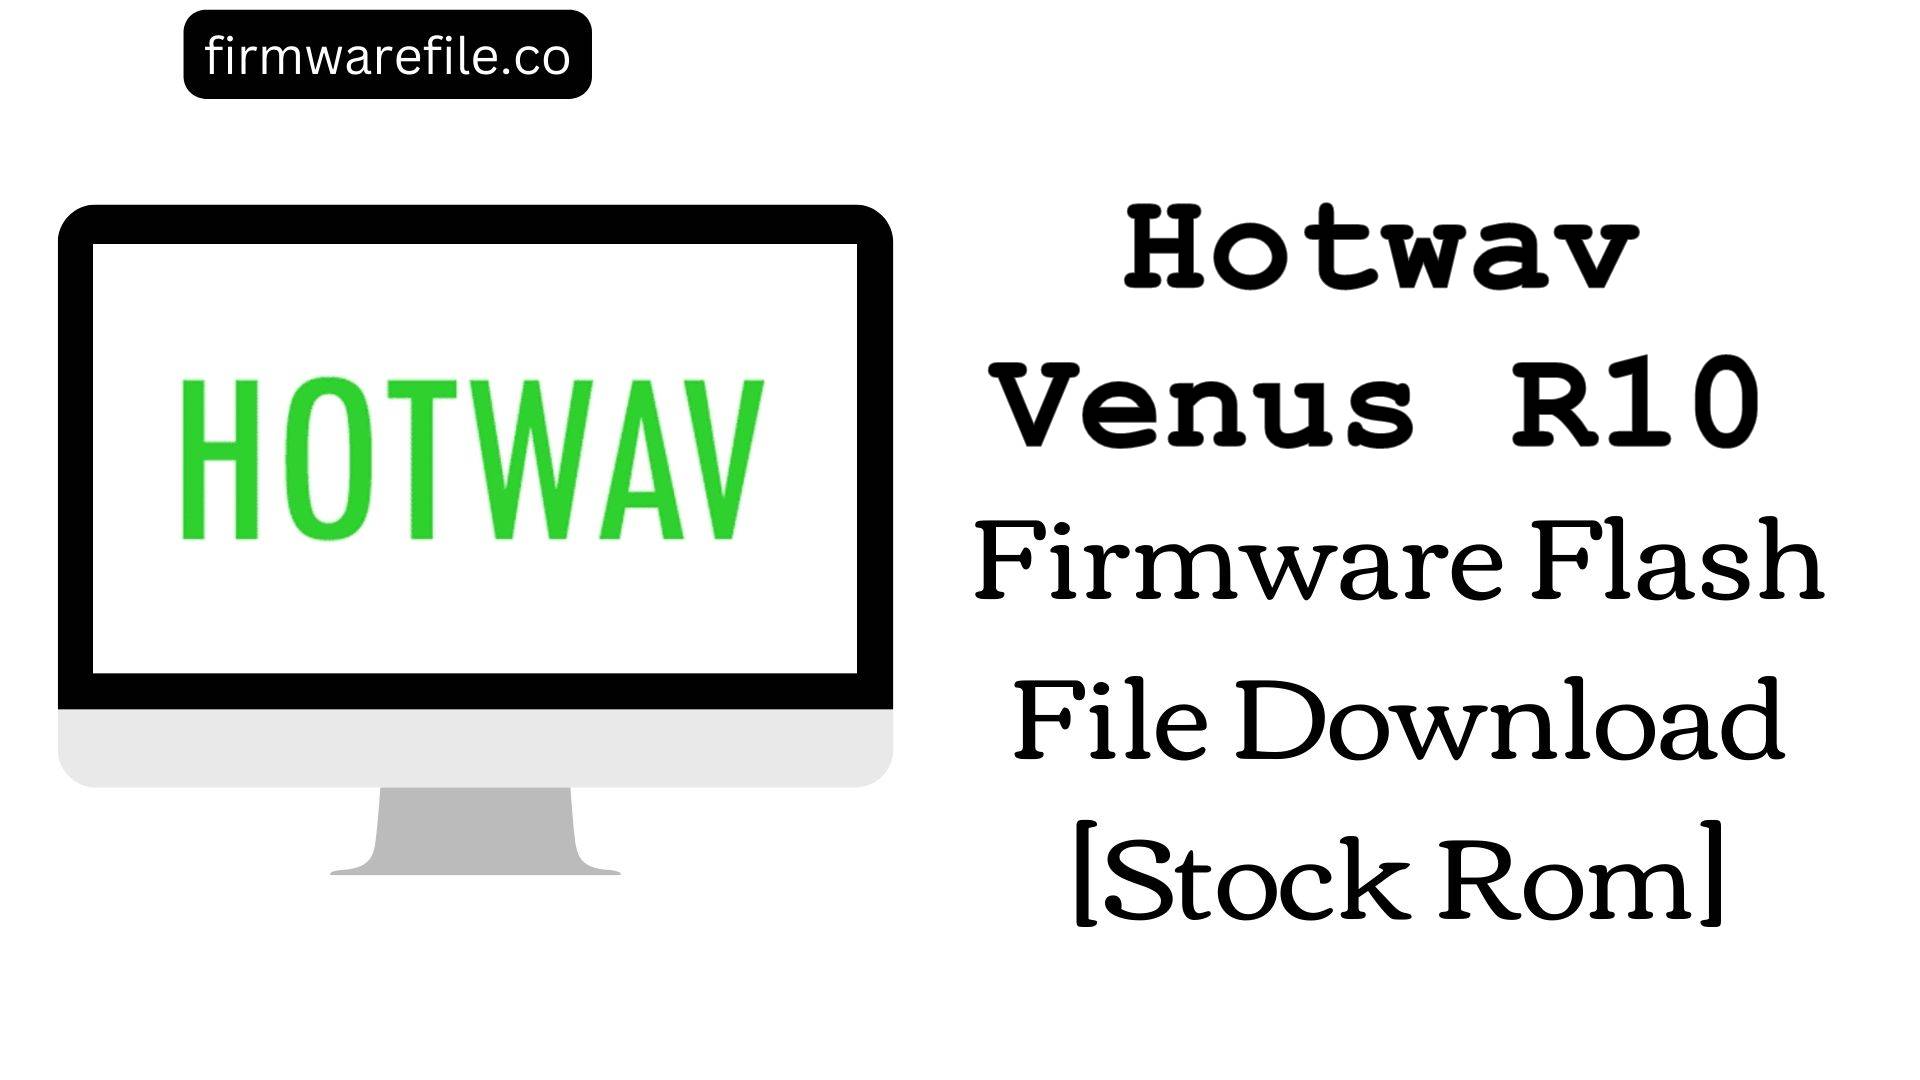 Hotwav Venus R10